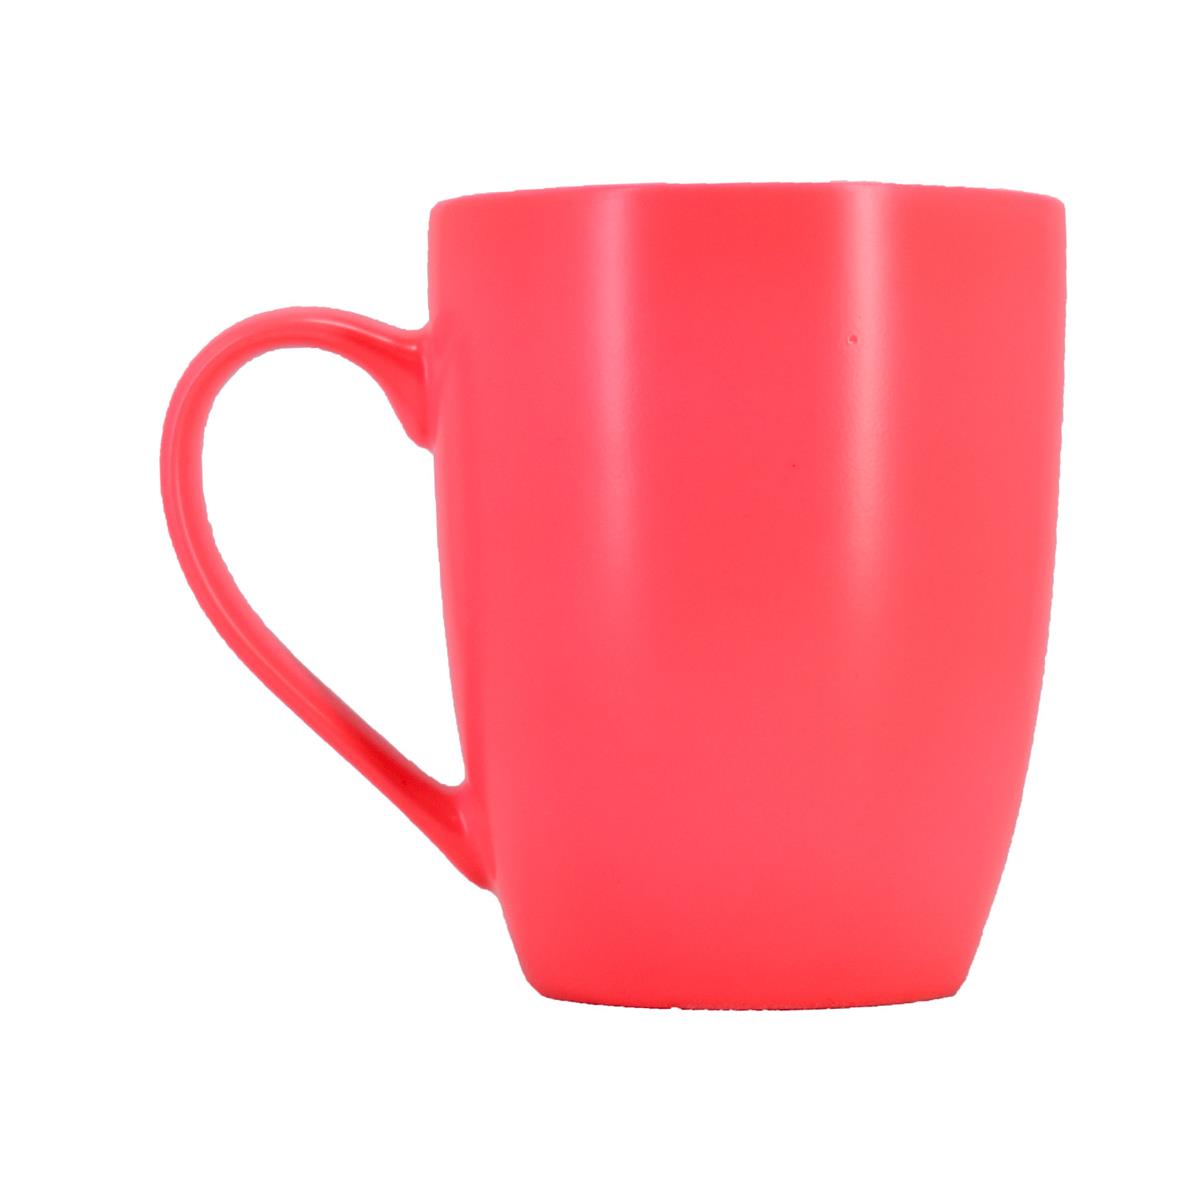 Single Color Ceramic Coffee or Tea Mug with handle - 325ml (BPY001-B)